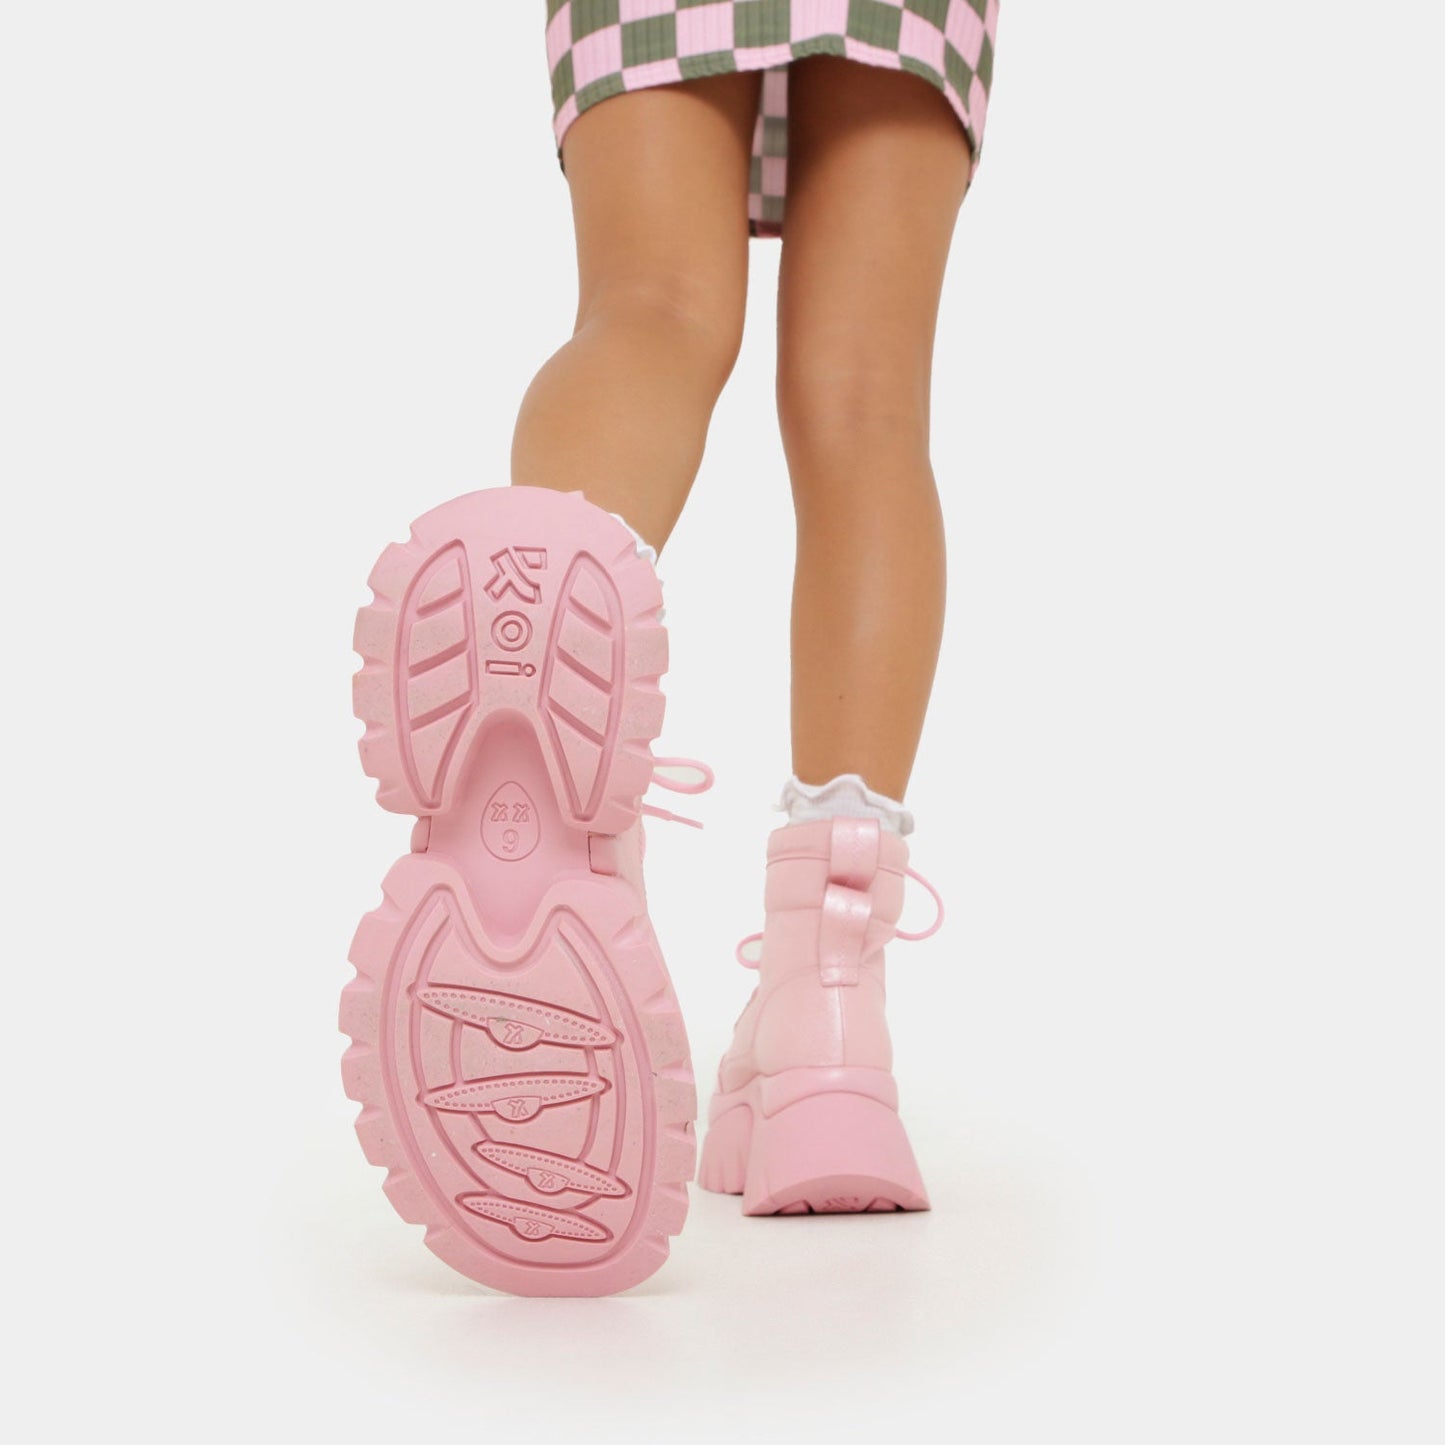 Gooey Bubblegum Platform Boots - Ankle Boots - KOI Footwear - Pink - Model Sole View